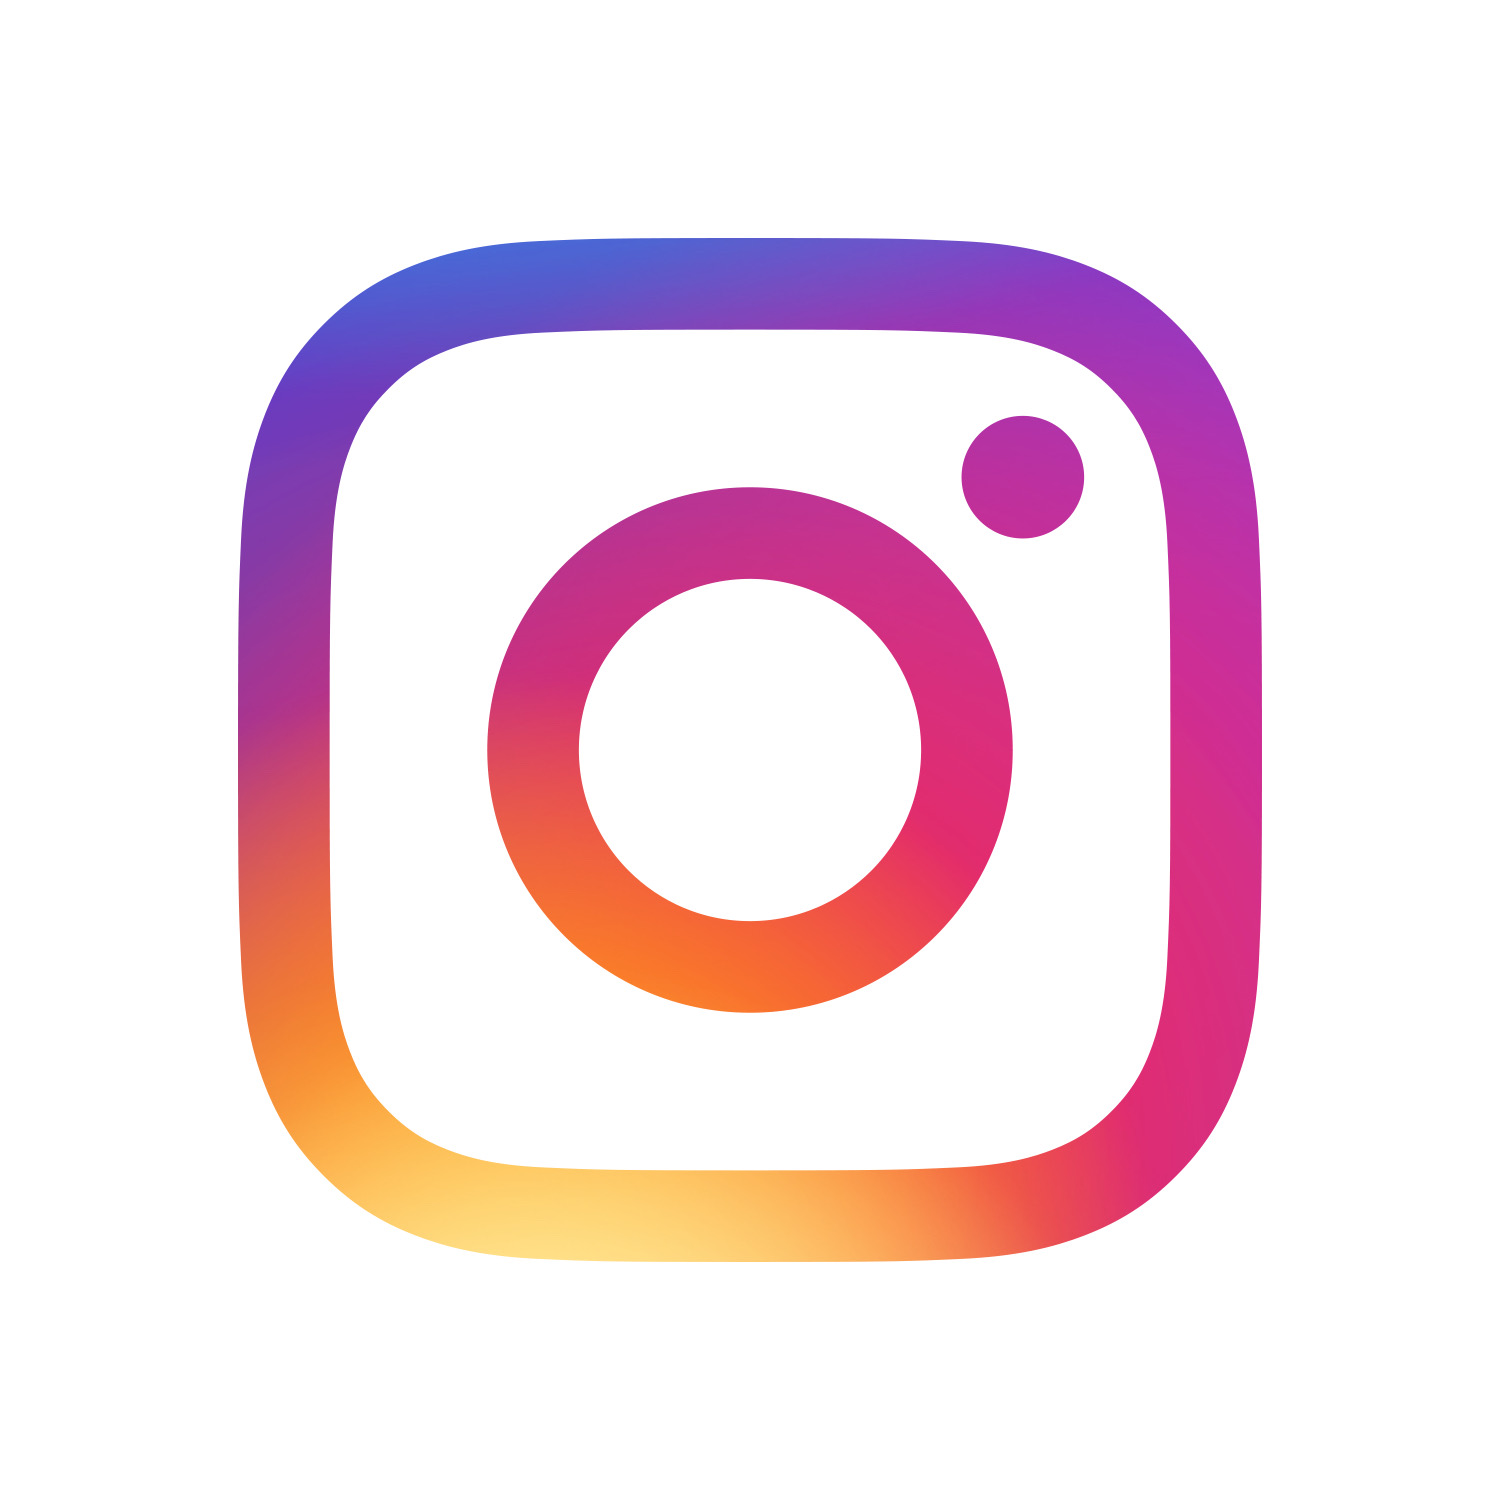 Instagram 2020 Roundtable